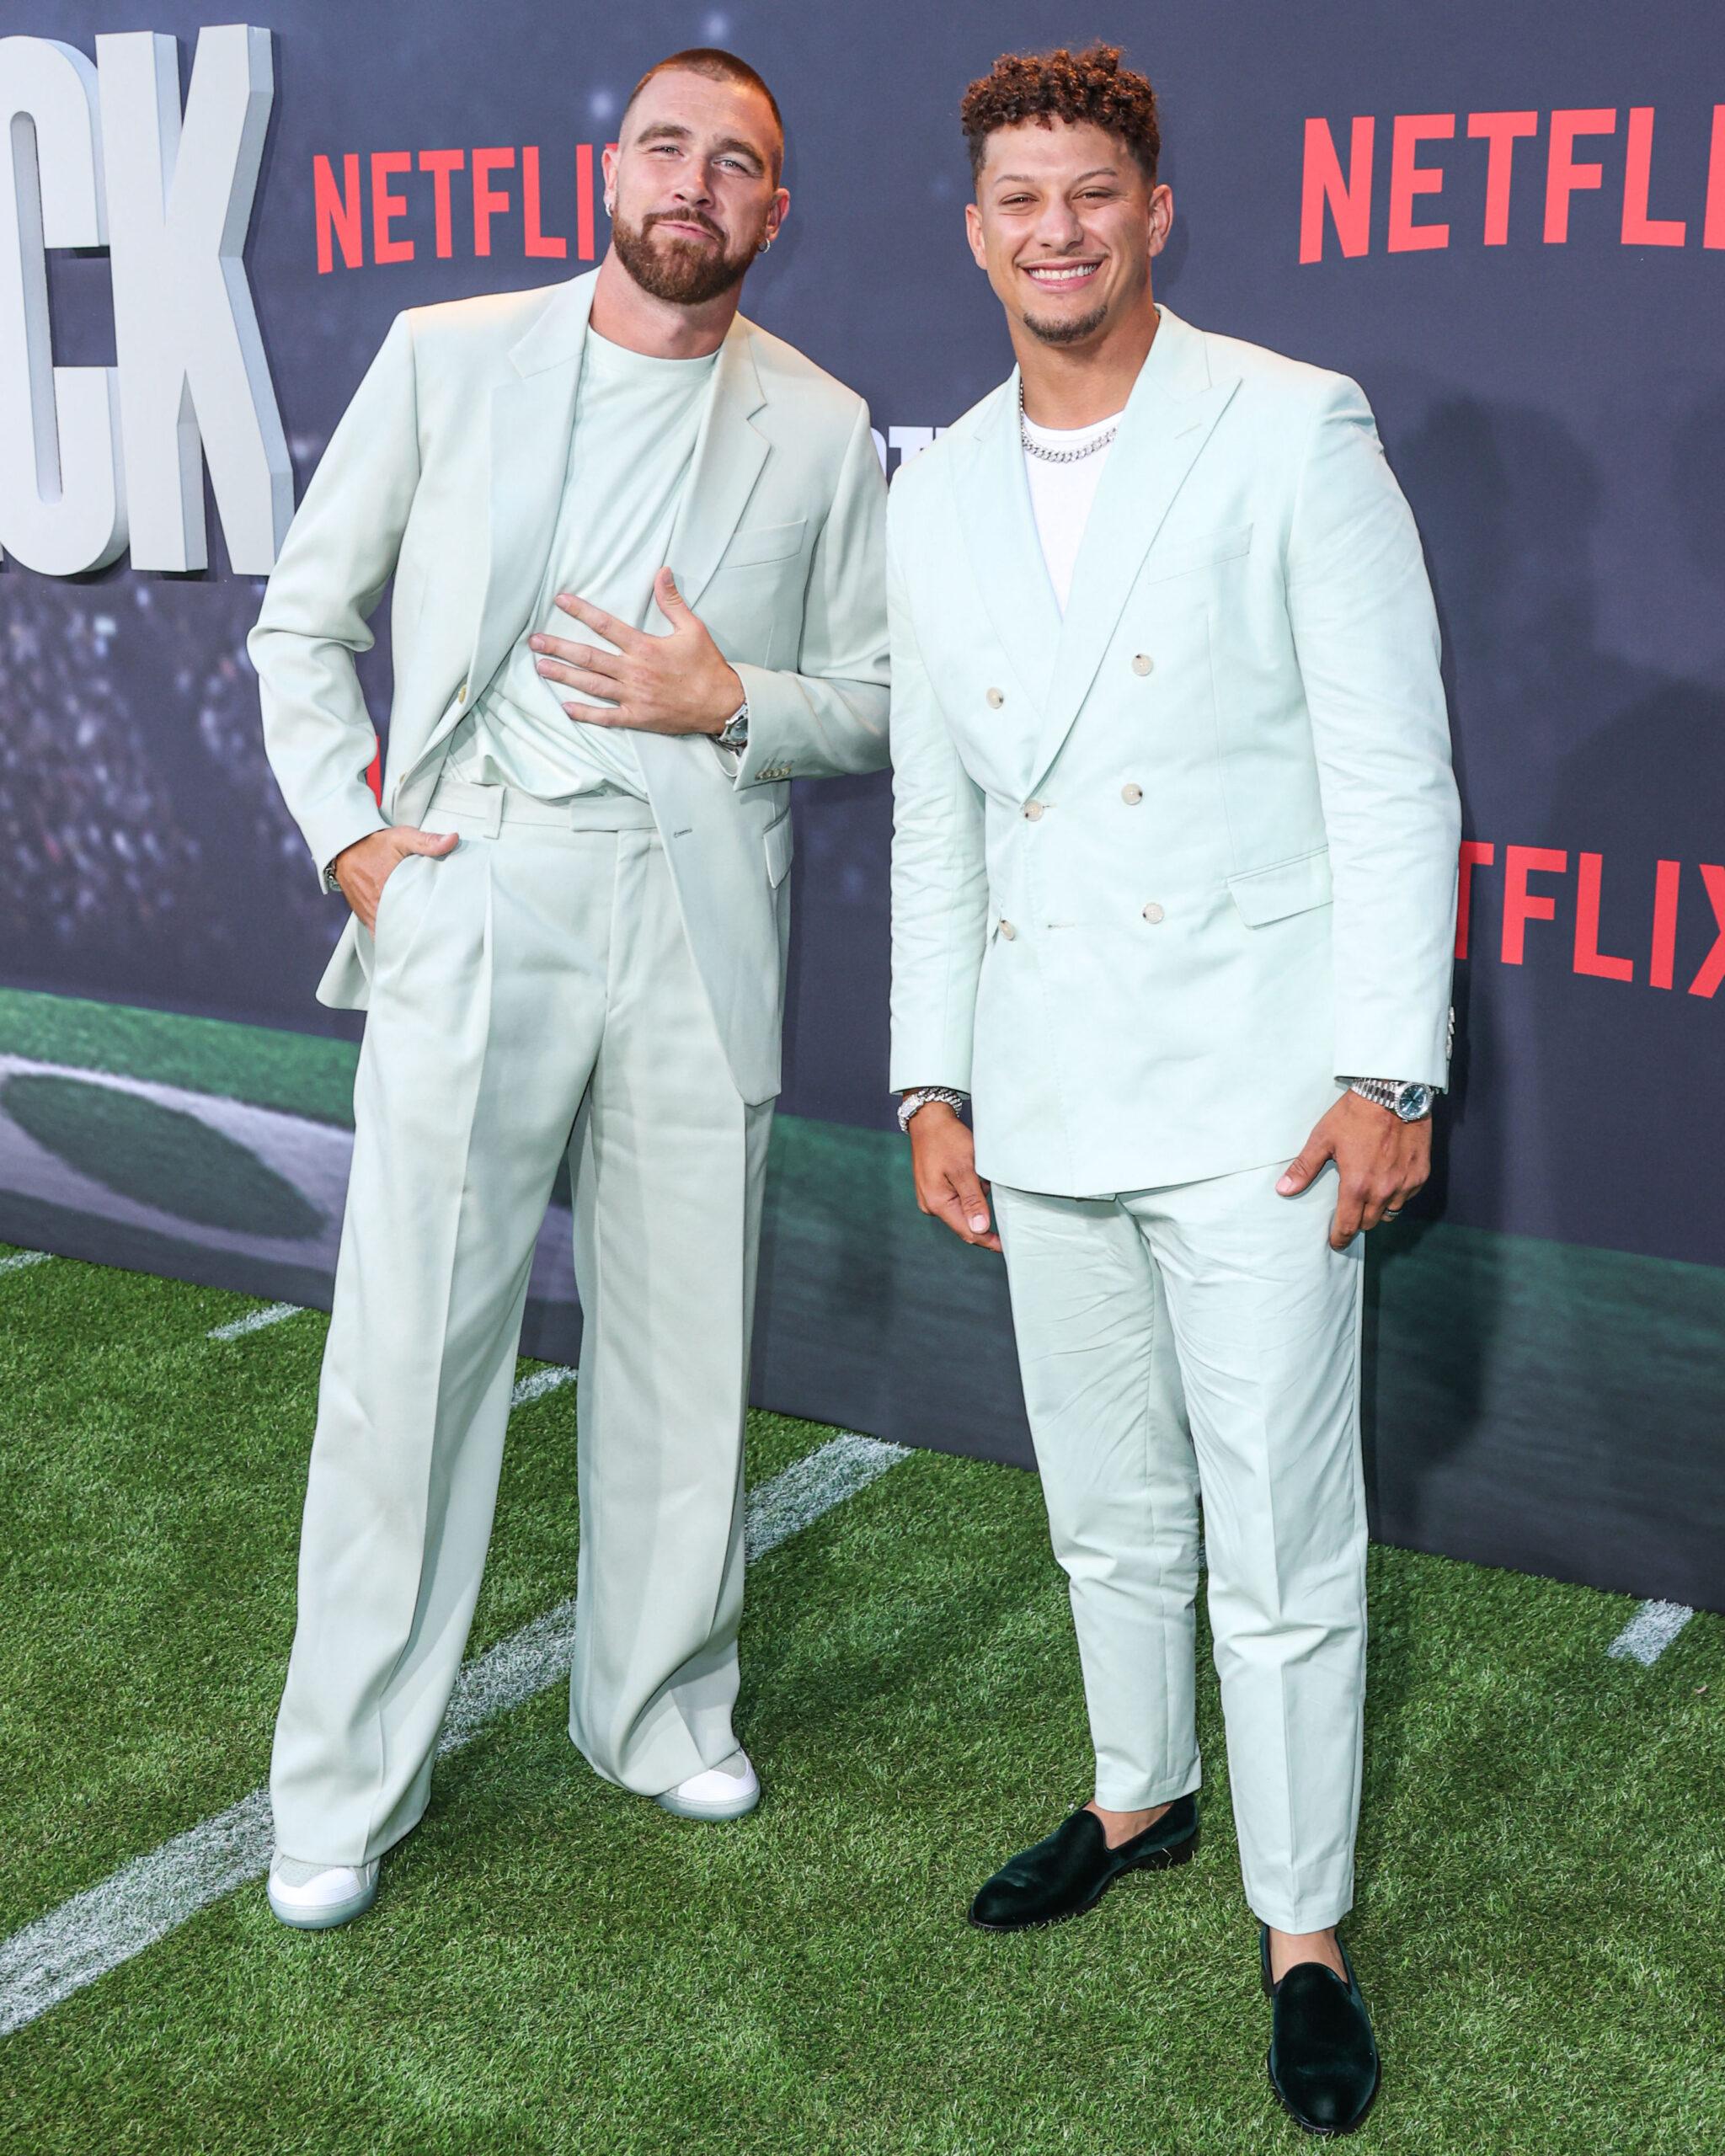 Patrick Mahomes and Travis Kelce at Netflix premiere